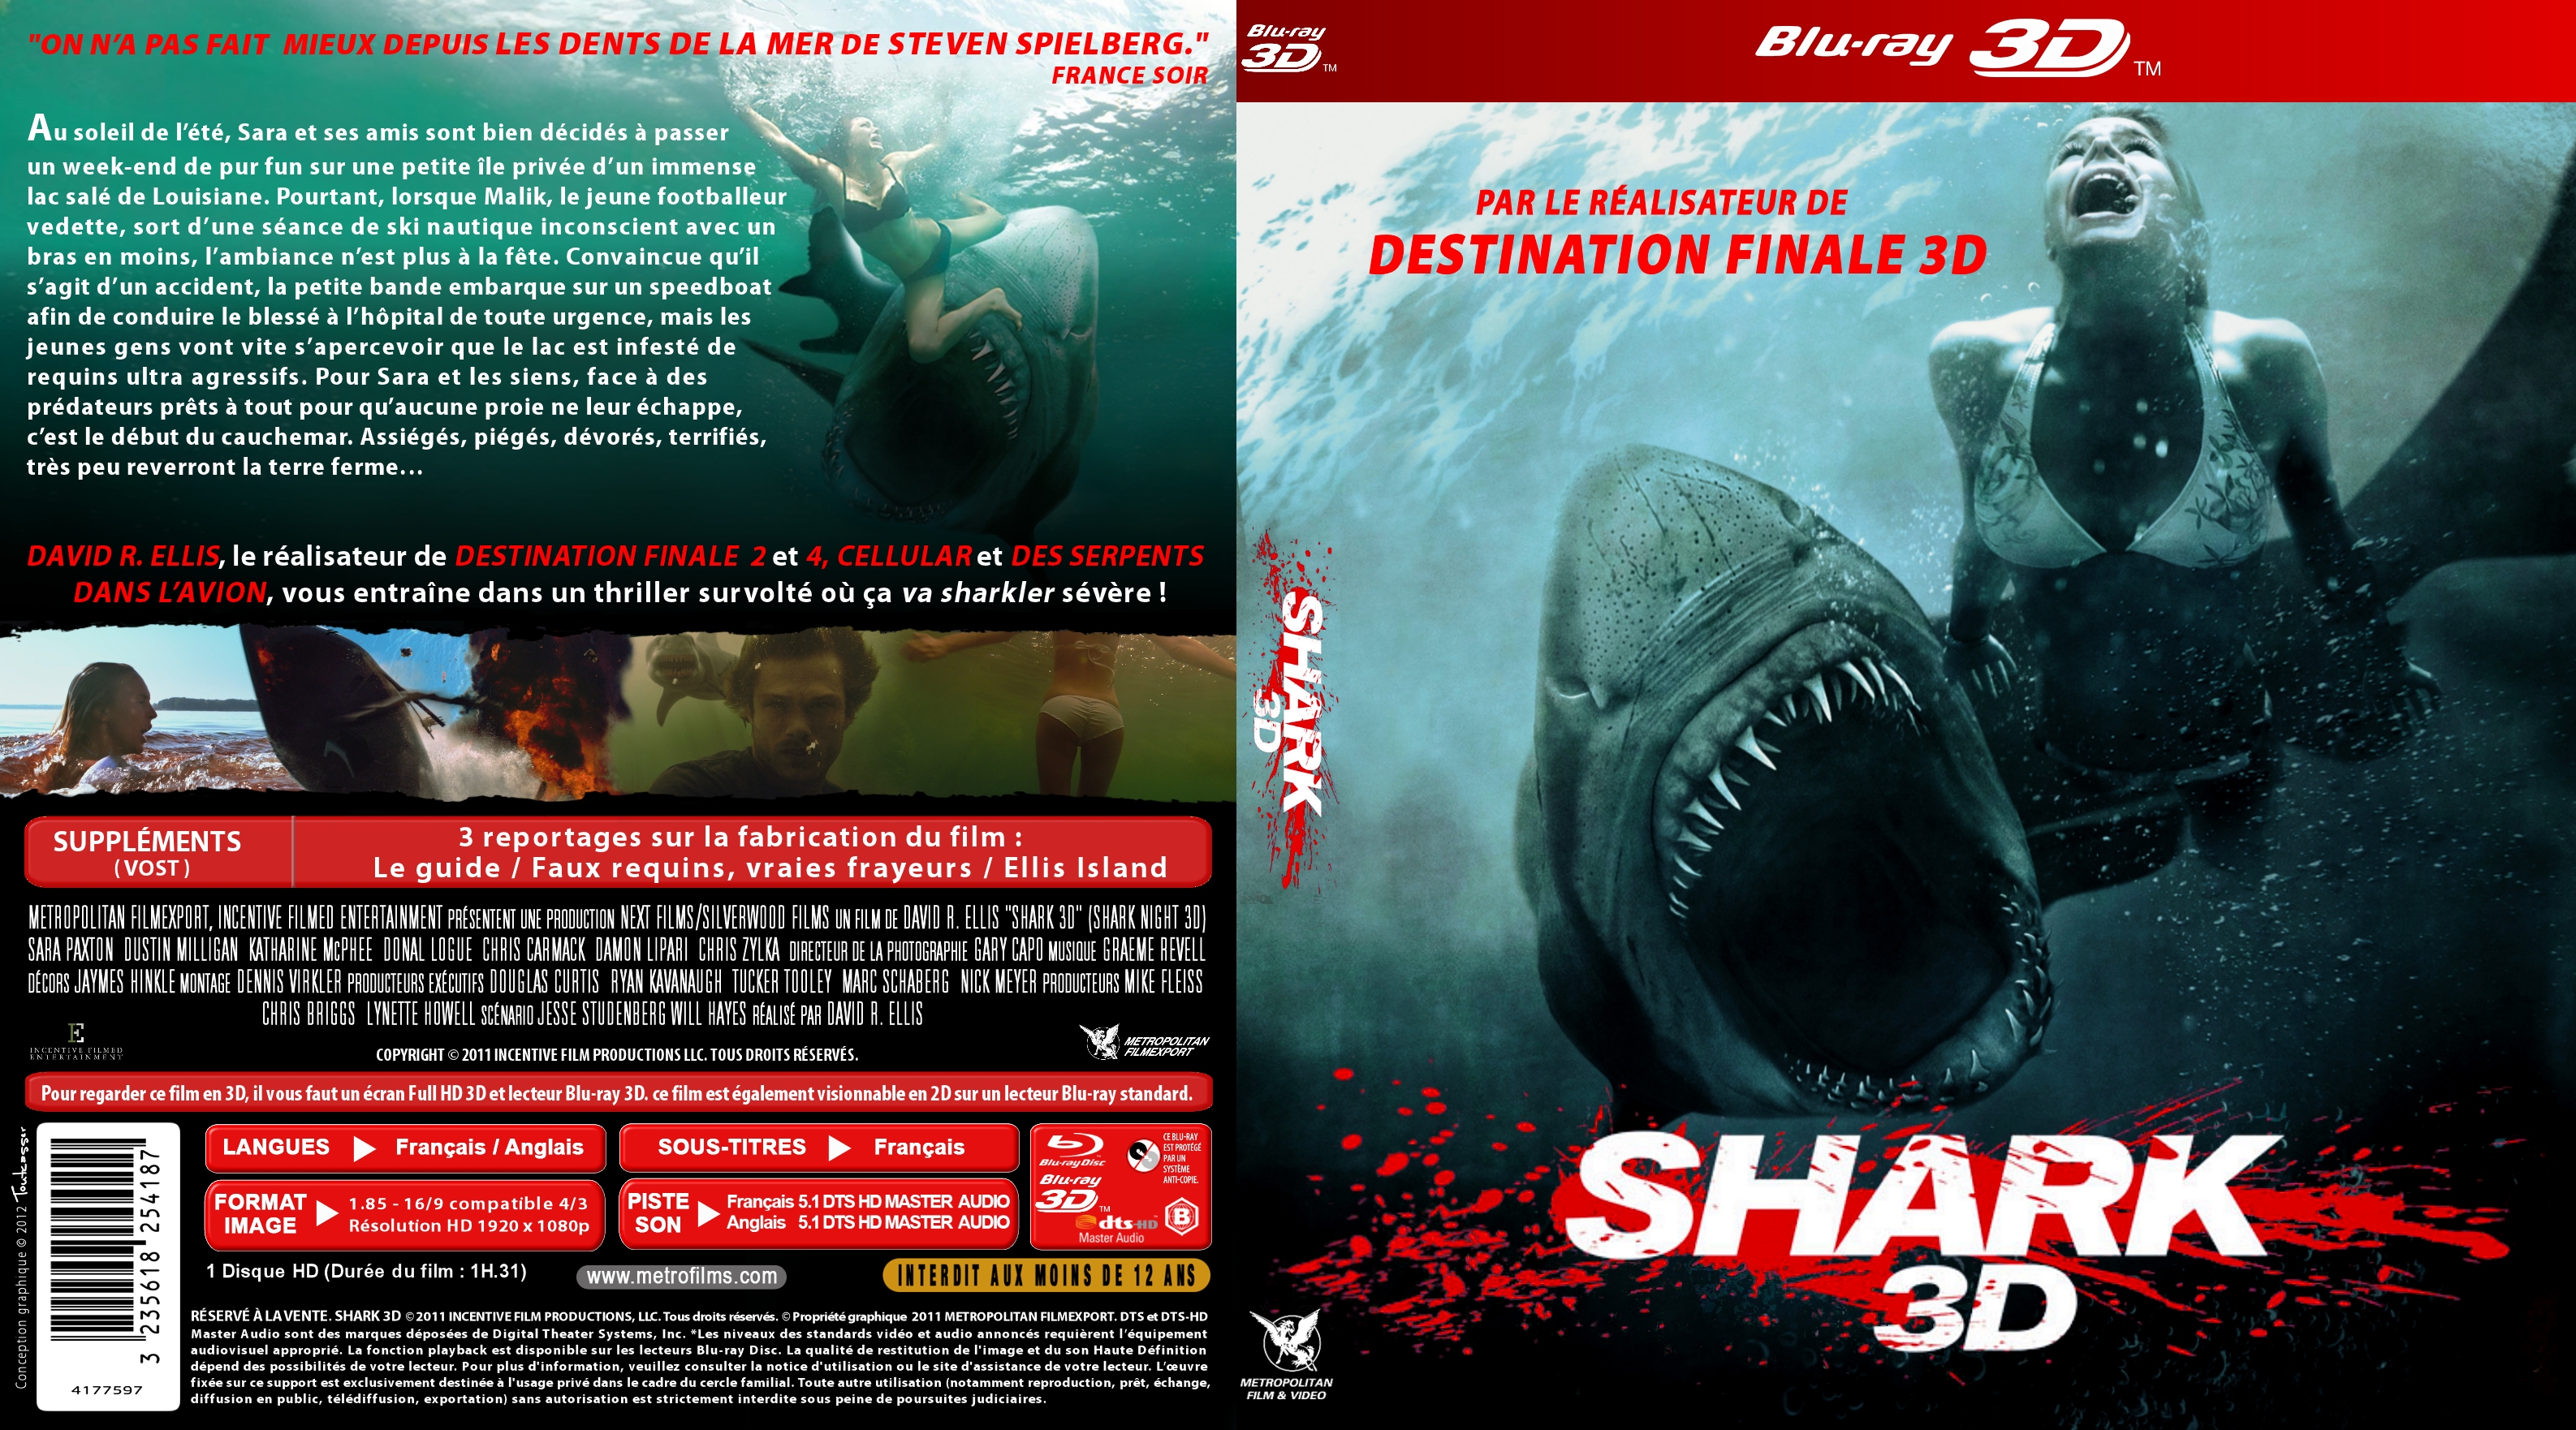 Jaquette DVD de Shark 3D custom (BLU-RAY) - Cinéma Passion